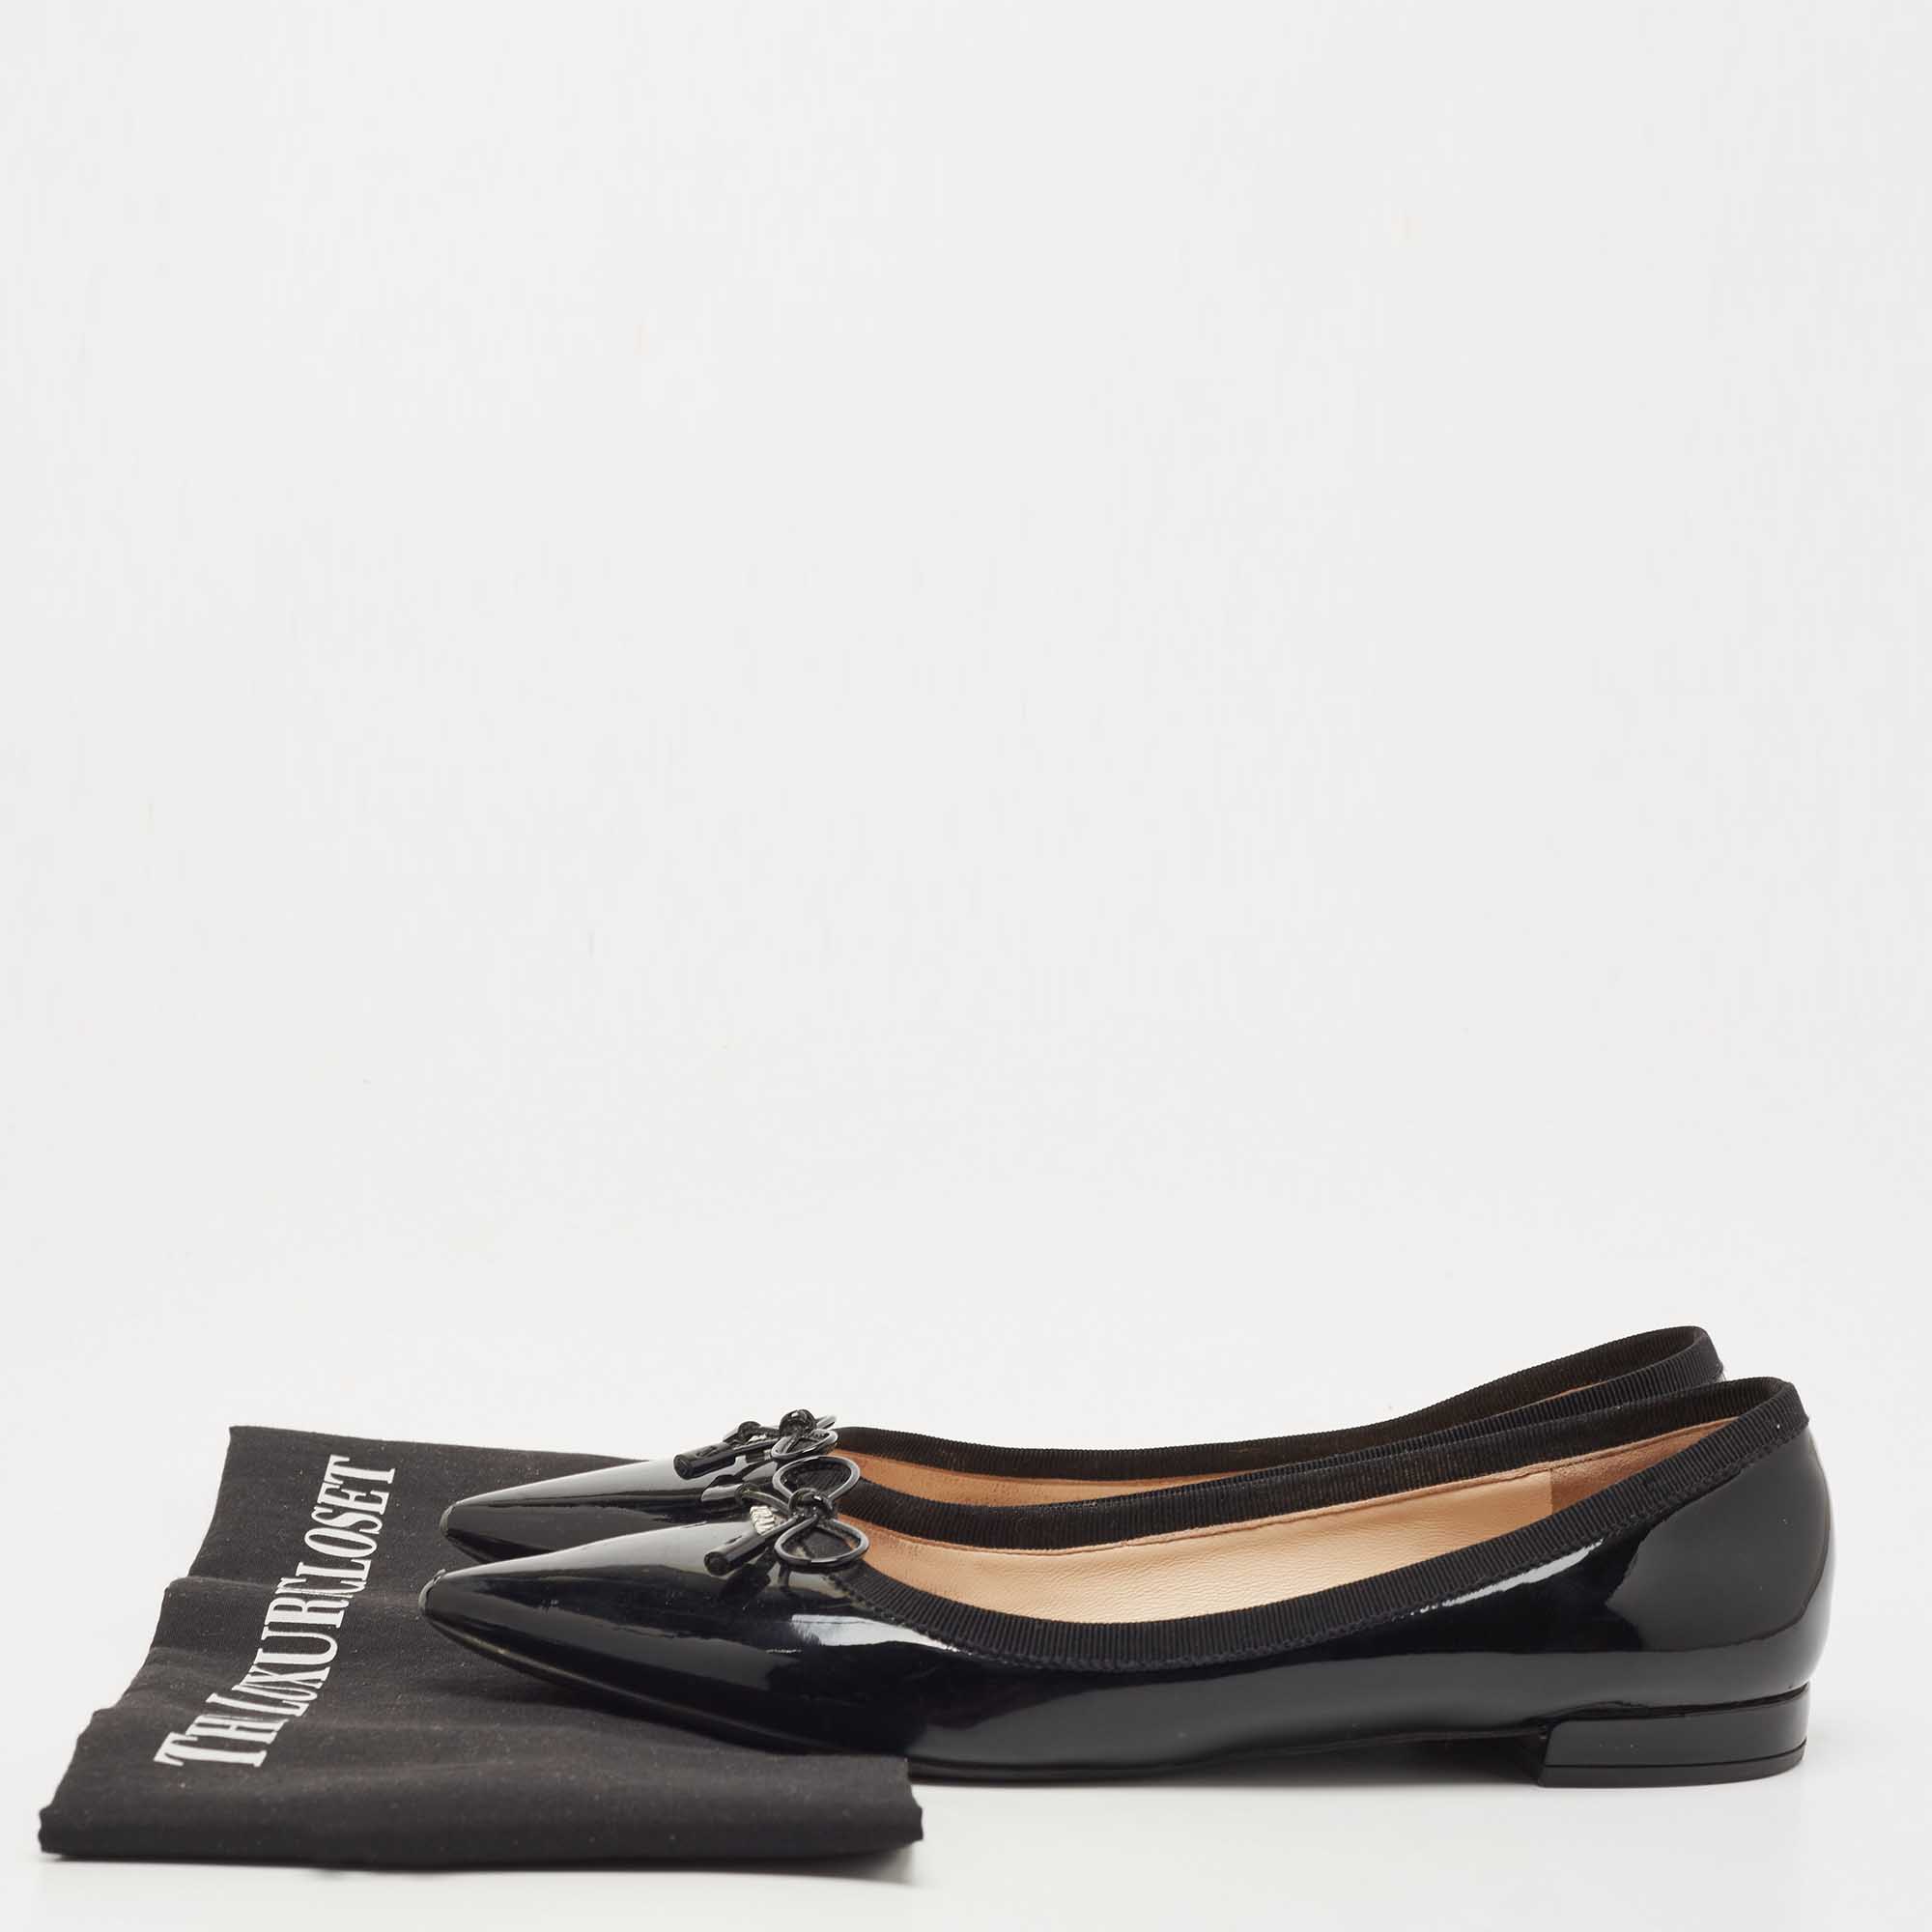 Prada Black Patent Leather Bow Ballet Flats Size 37.5